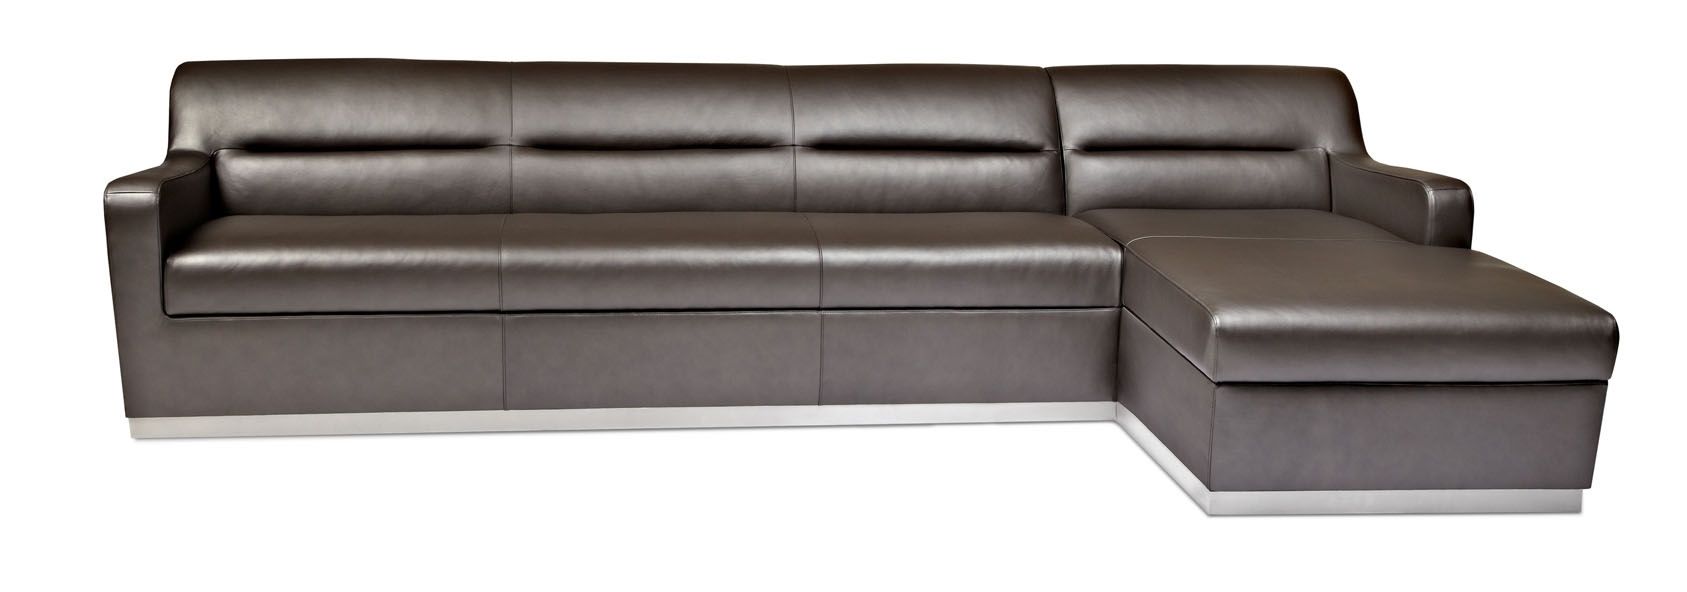 American Leather Niagara Sectional Sofa | Modern Furniture Inside Niagara Sectional Sofas (View 6 of 10)